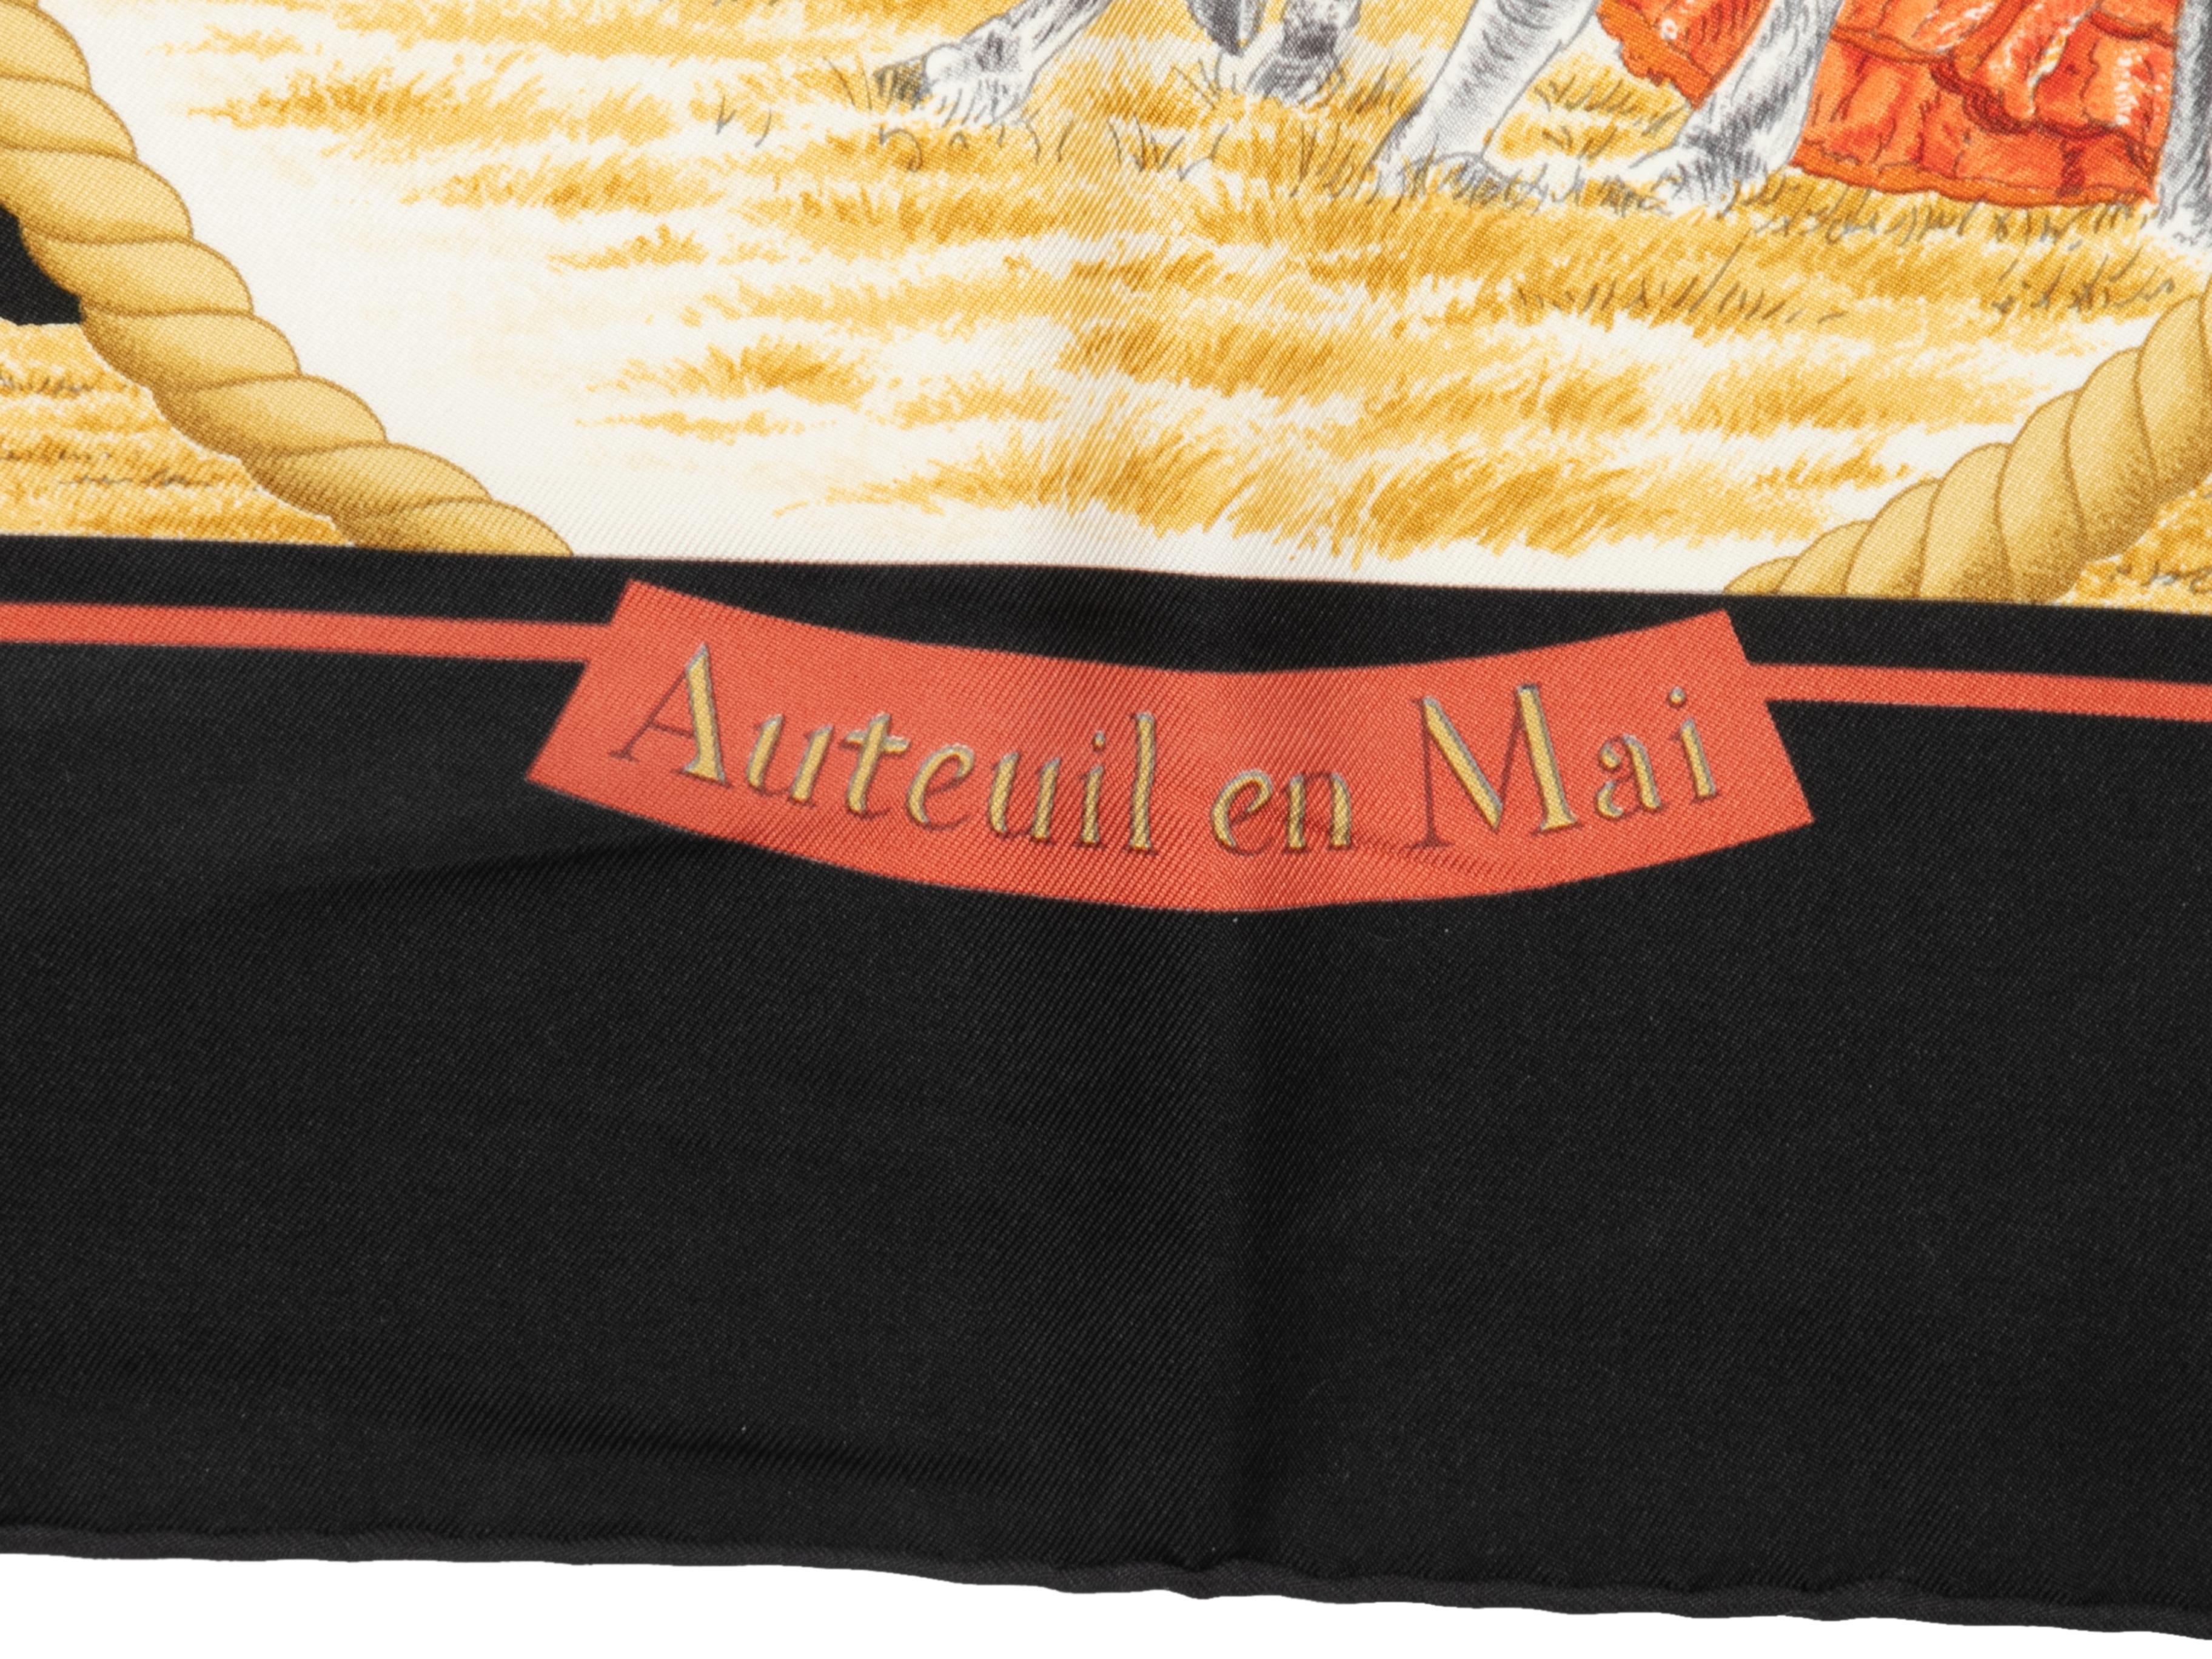 Black and multicolor Auteuil en Mai motif silk scarf by Hermes. 34